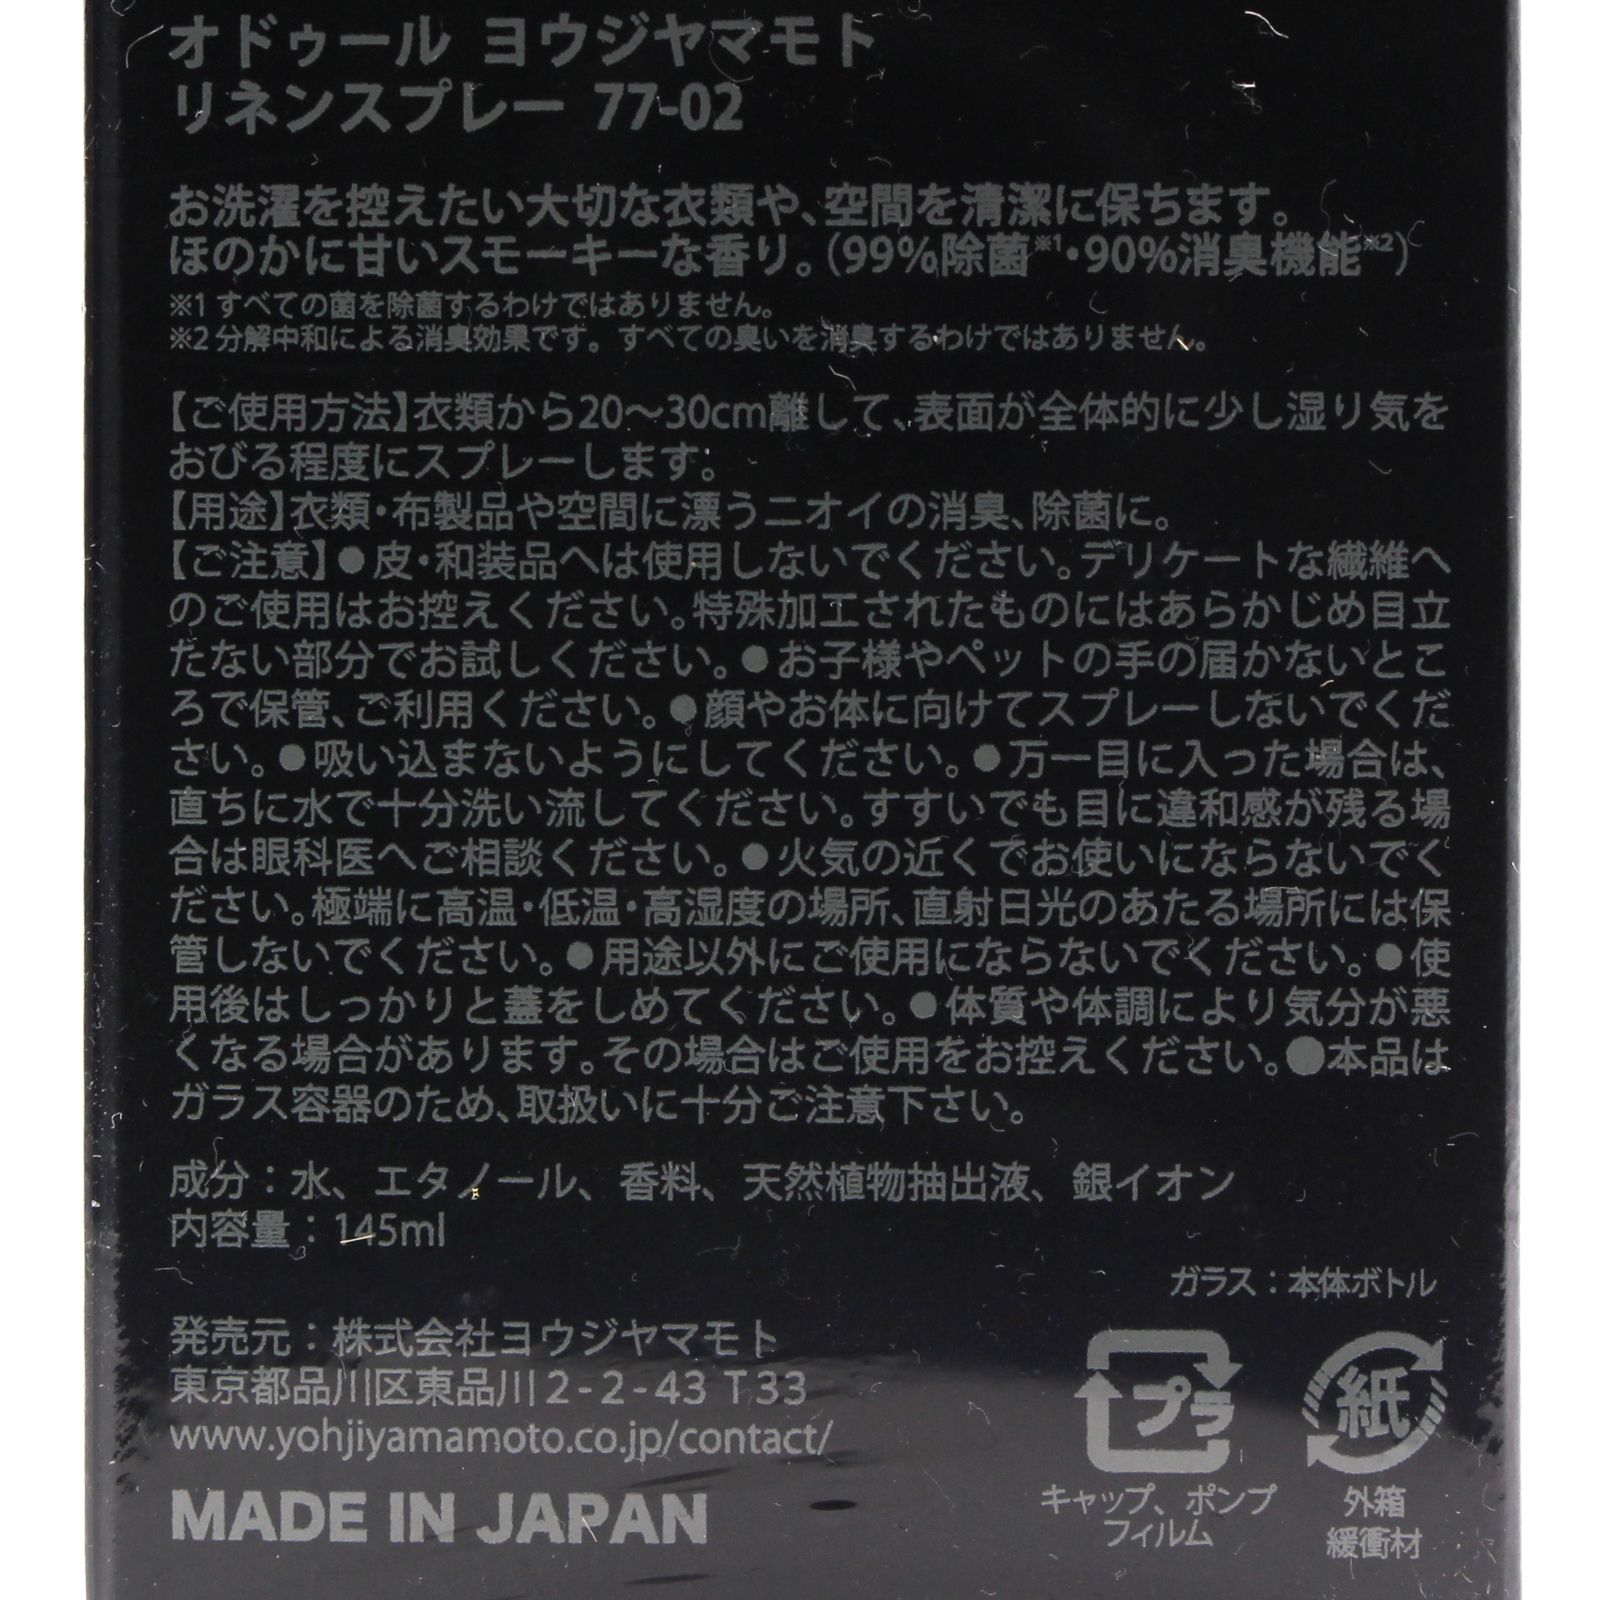 Yohji Yamamoto L’odeur Linen spray 77-02 / FA-R95-945 - 2(ワンサイズ)